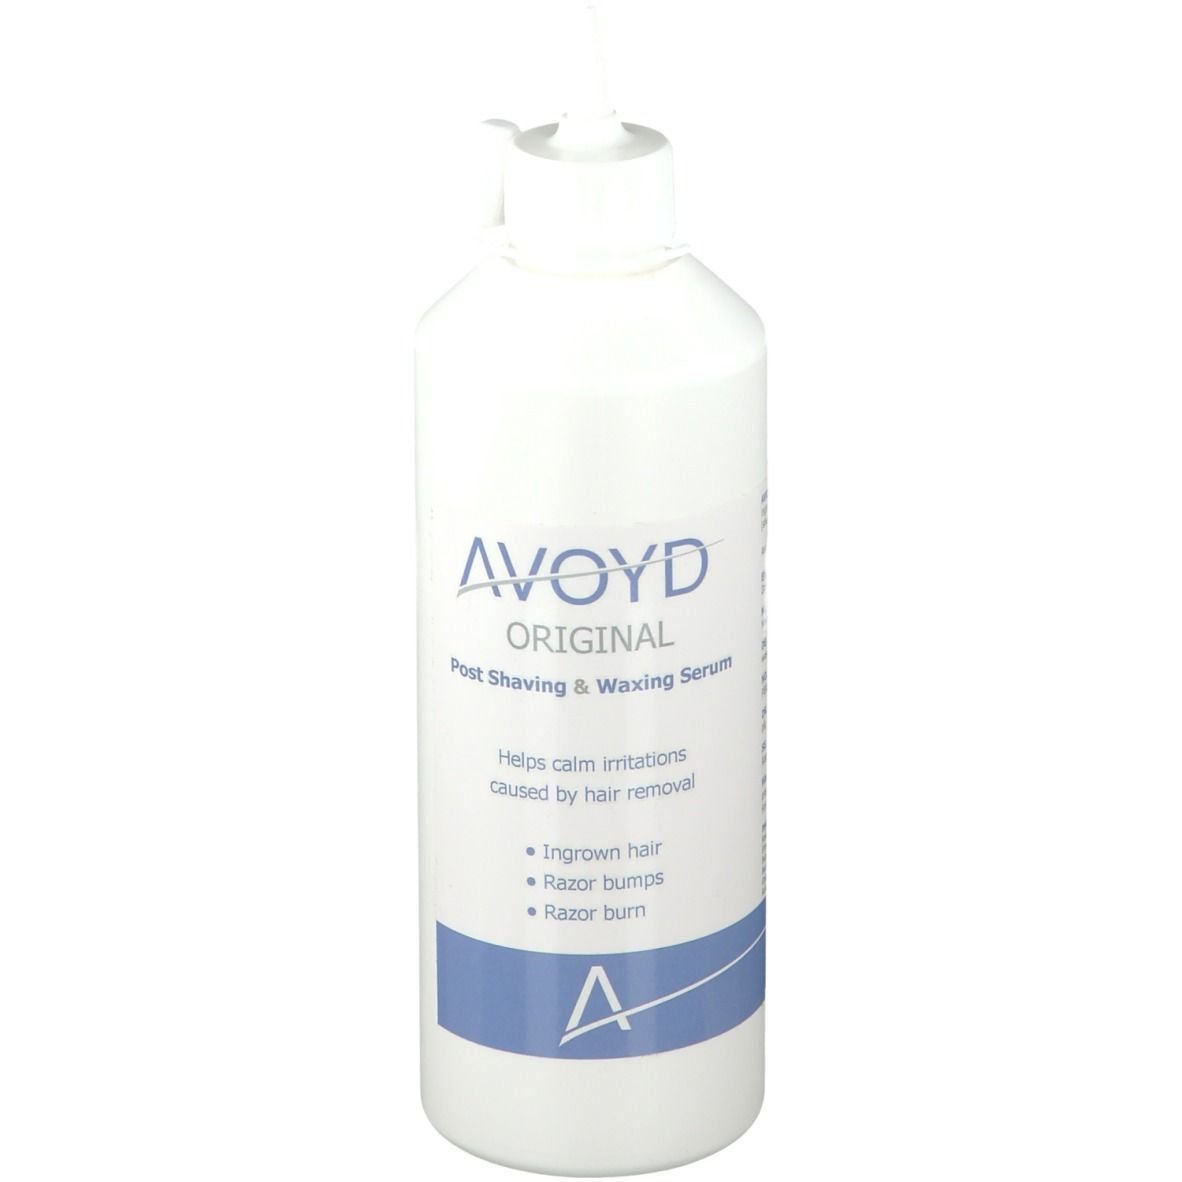 Avoyd Original Post Shaving & Waxing Serum